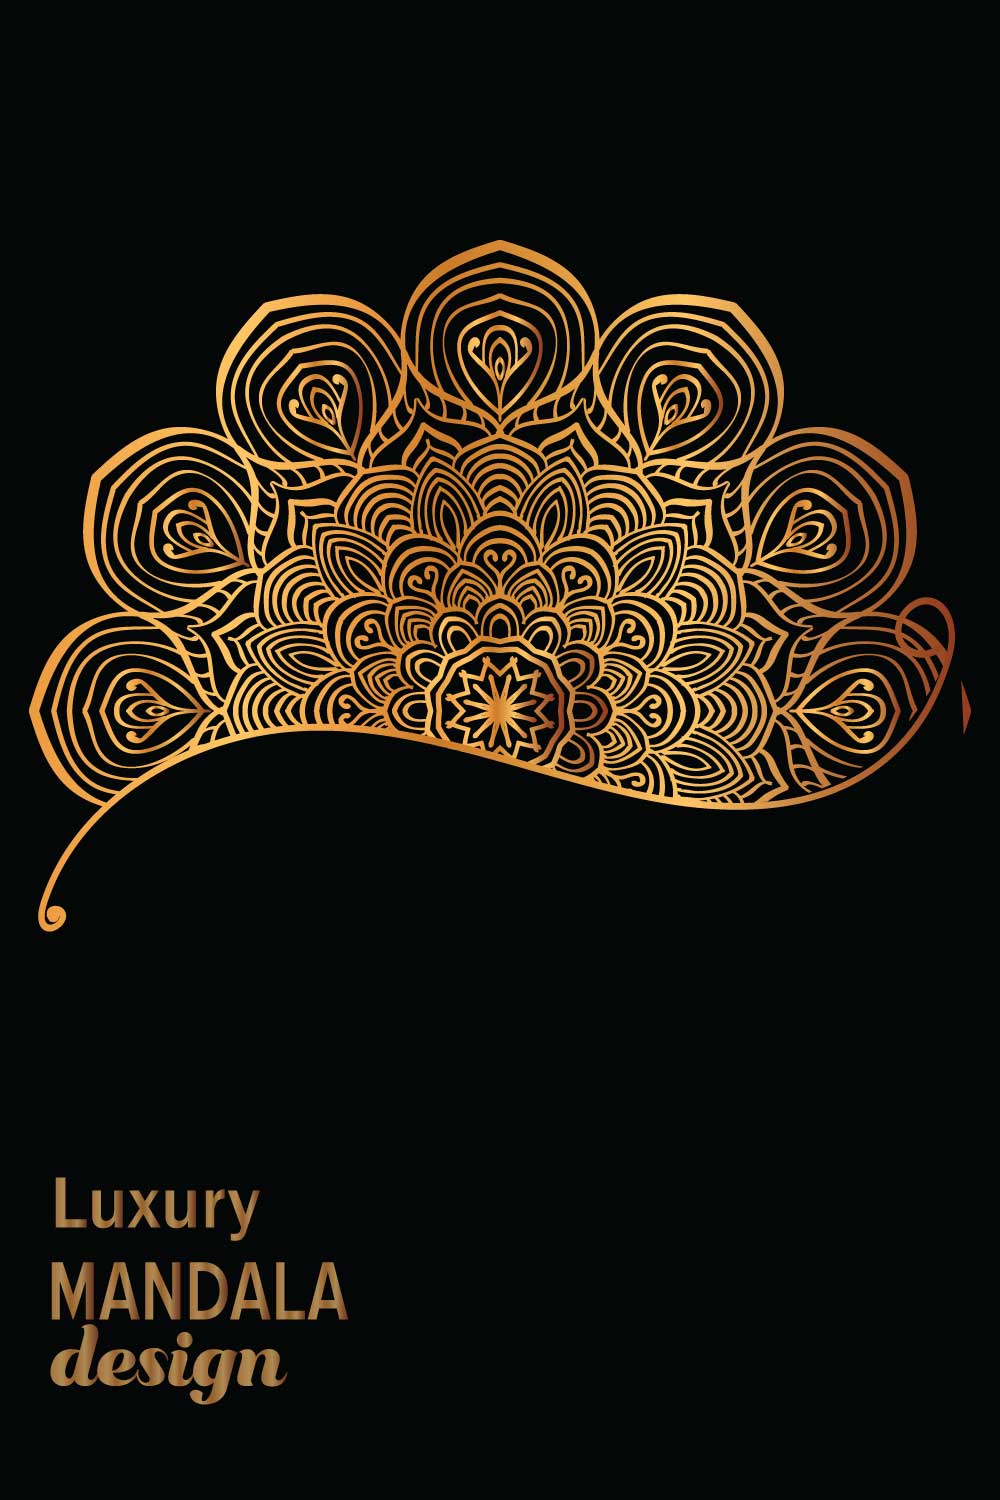 Luxury mandala background design pinterest preview image.